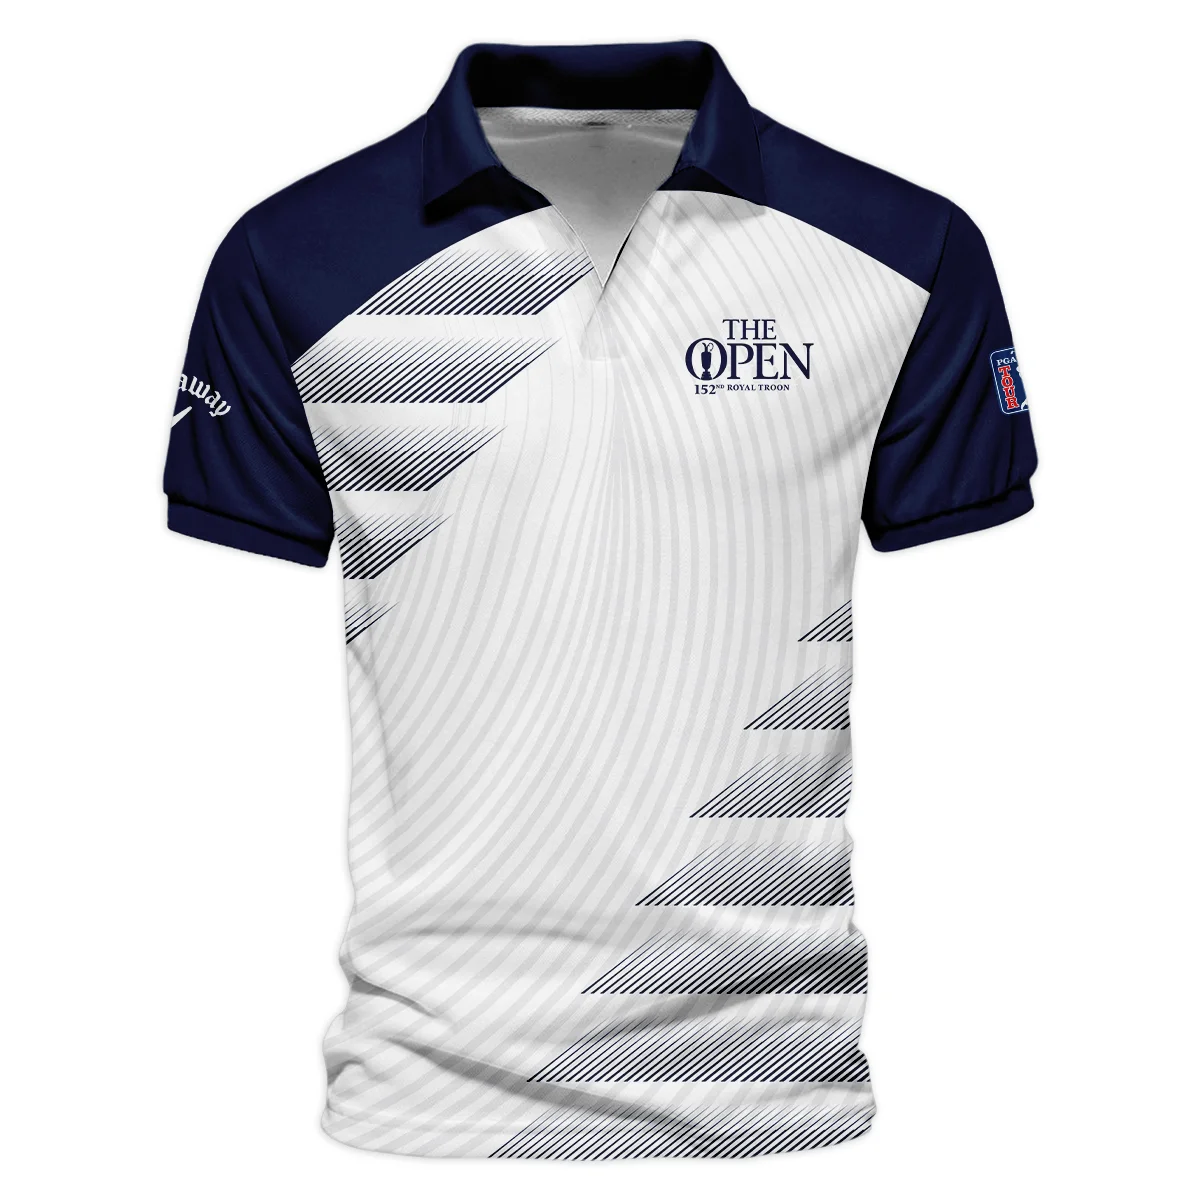 Callaway 152nd Open Championship Blue White Line Pattern Zipper Hoodie Shirt All Over Prints HOTOP280624A02CLWZHD